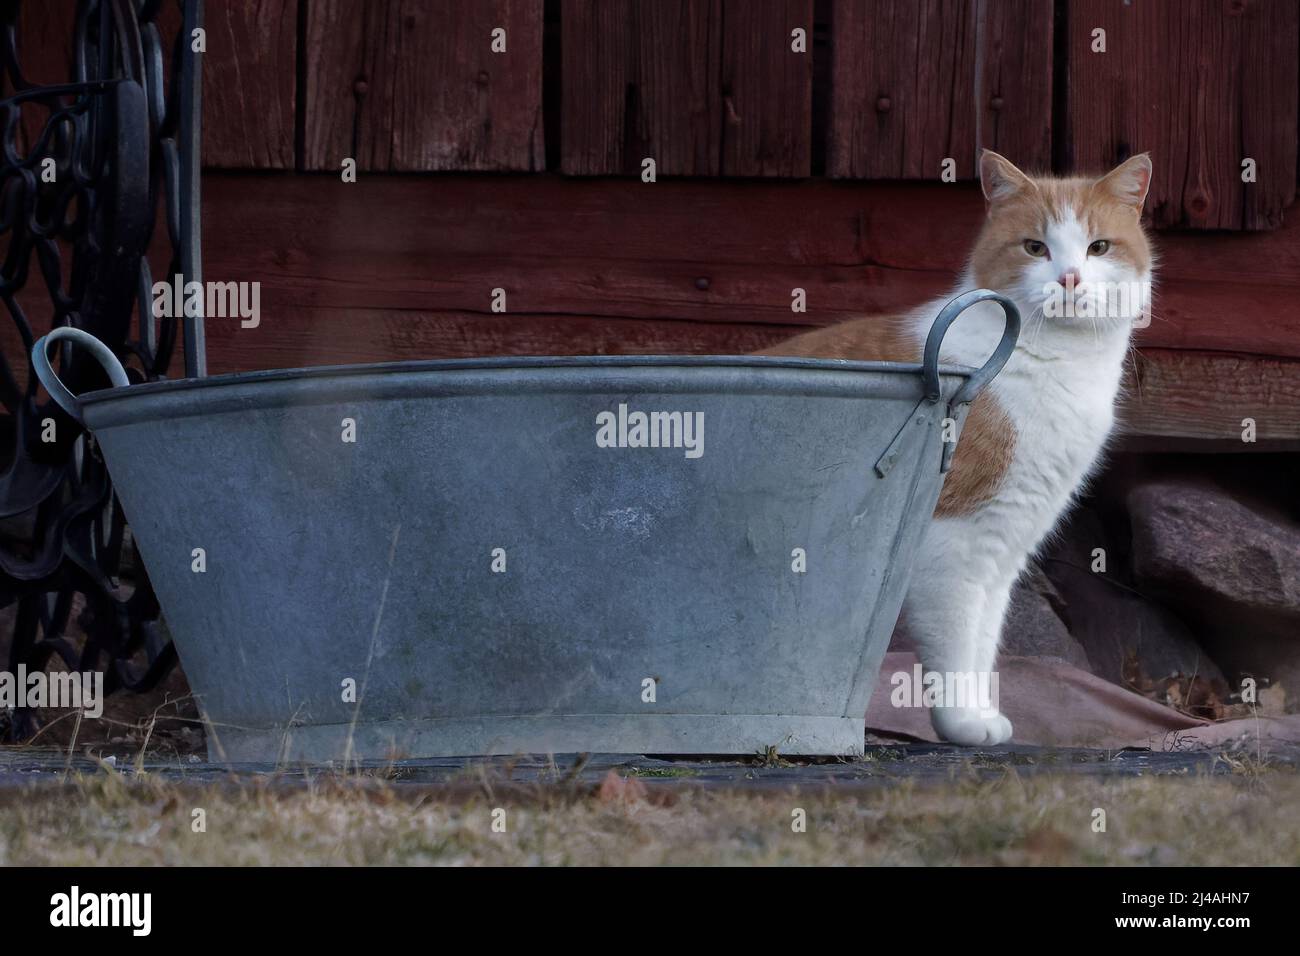 Curious cat hiding behind tub Stock Photo